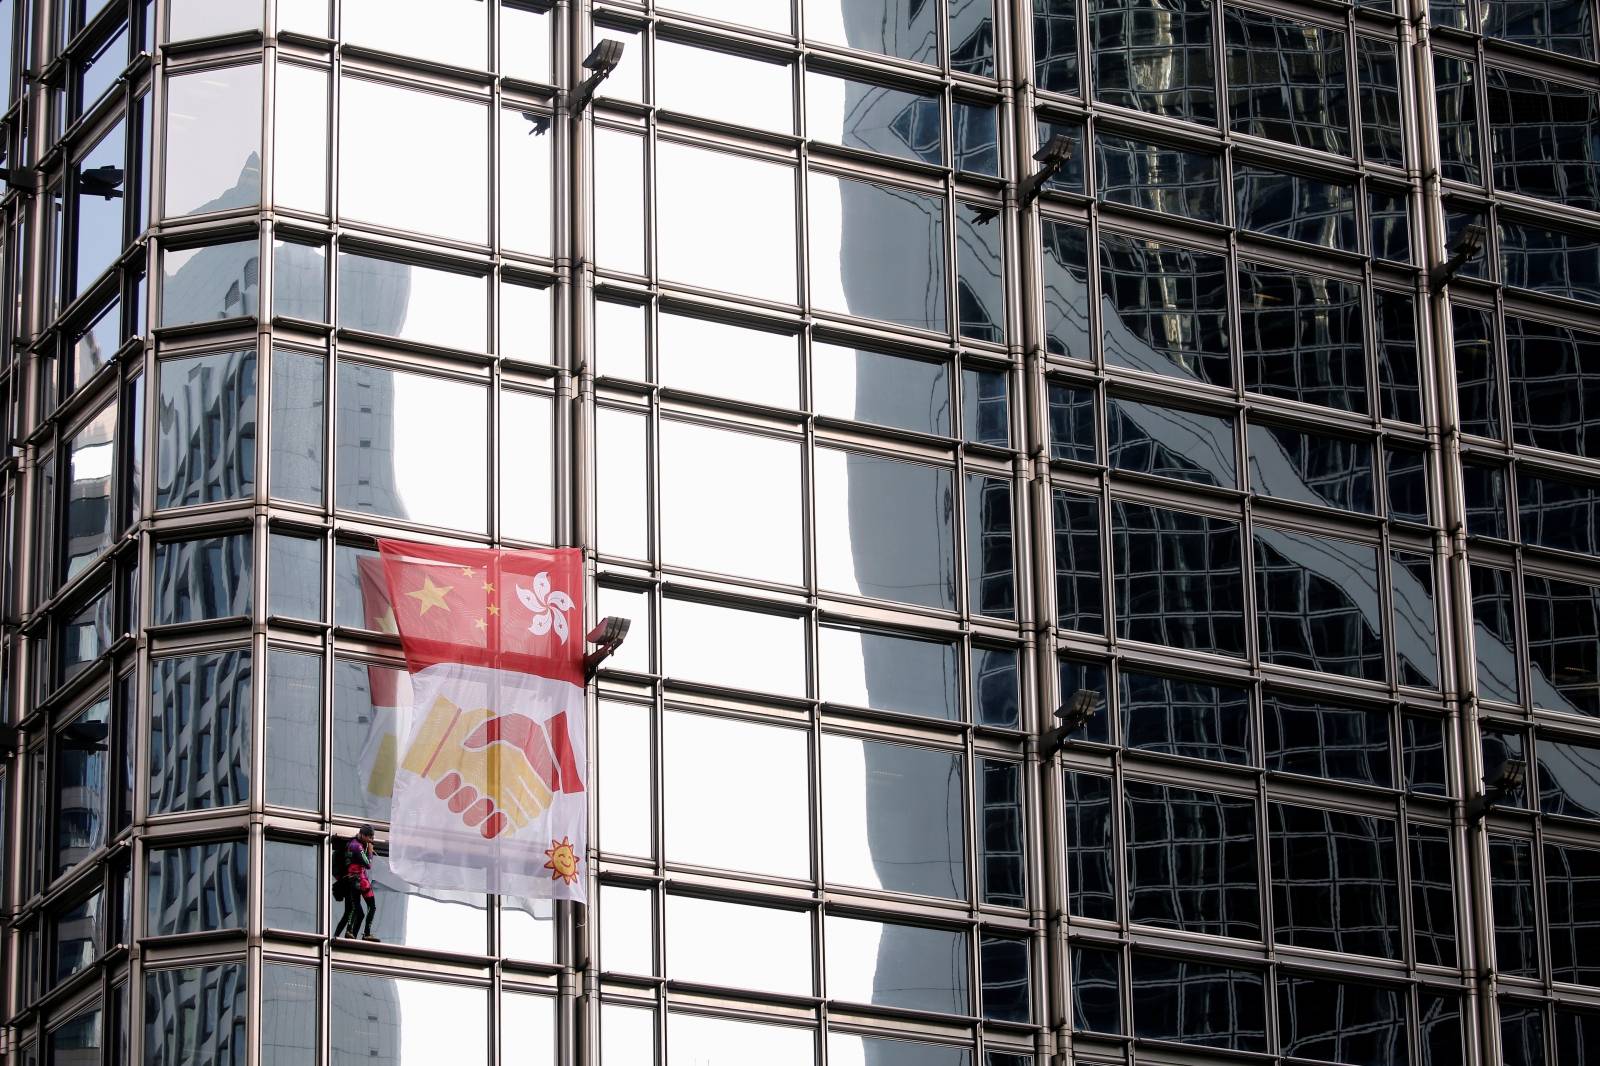 French urban climber Alain Robert climbs the Cheung Kong Center building in Hong Kong